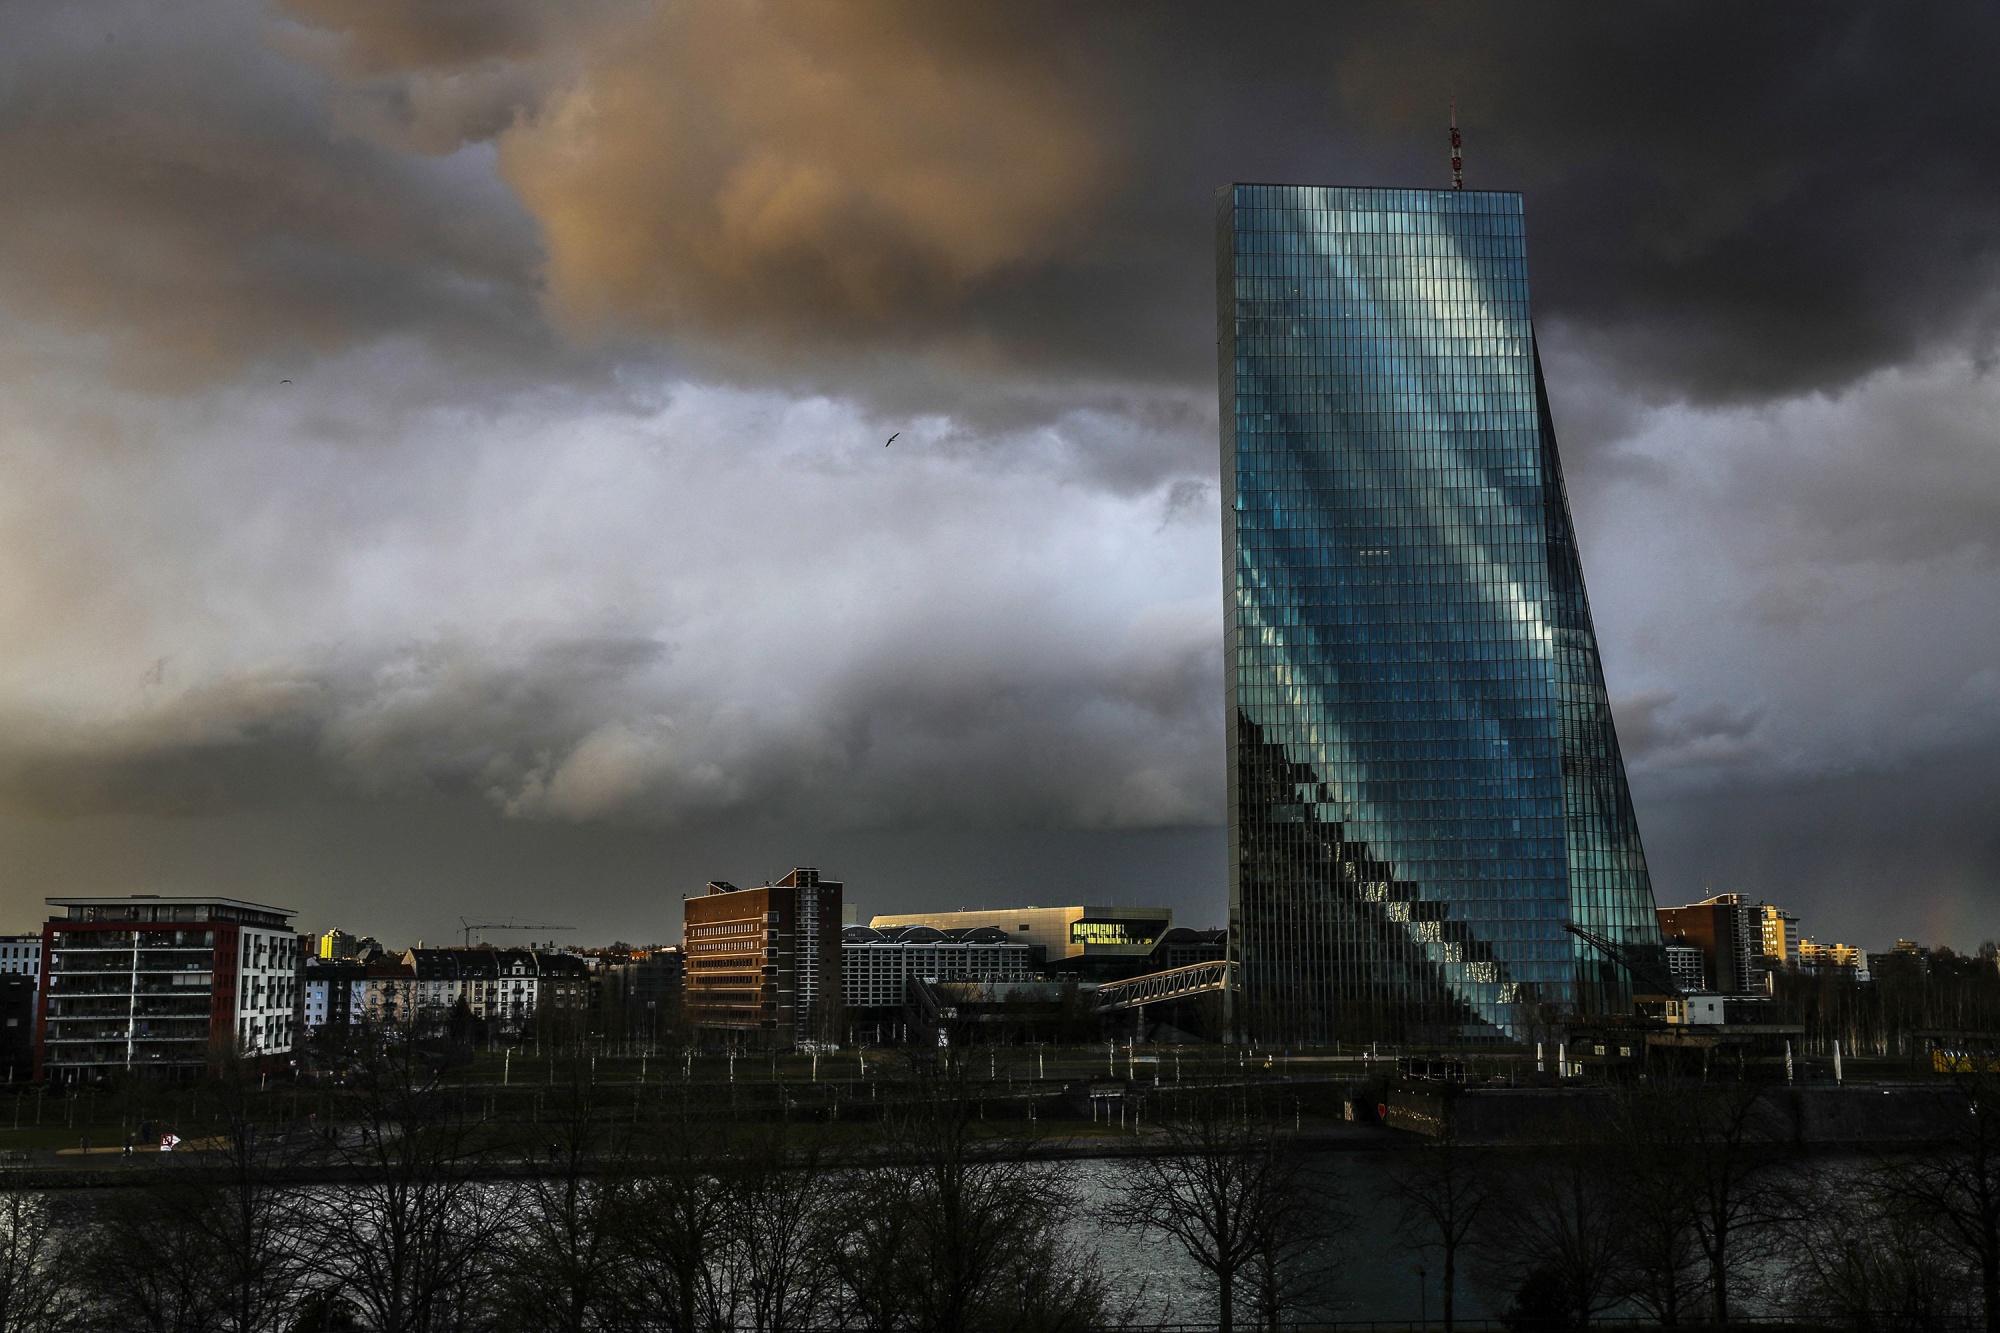 The European Central Bank headquarters in Frankfurt.